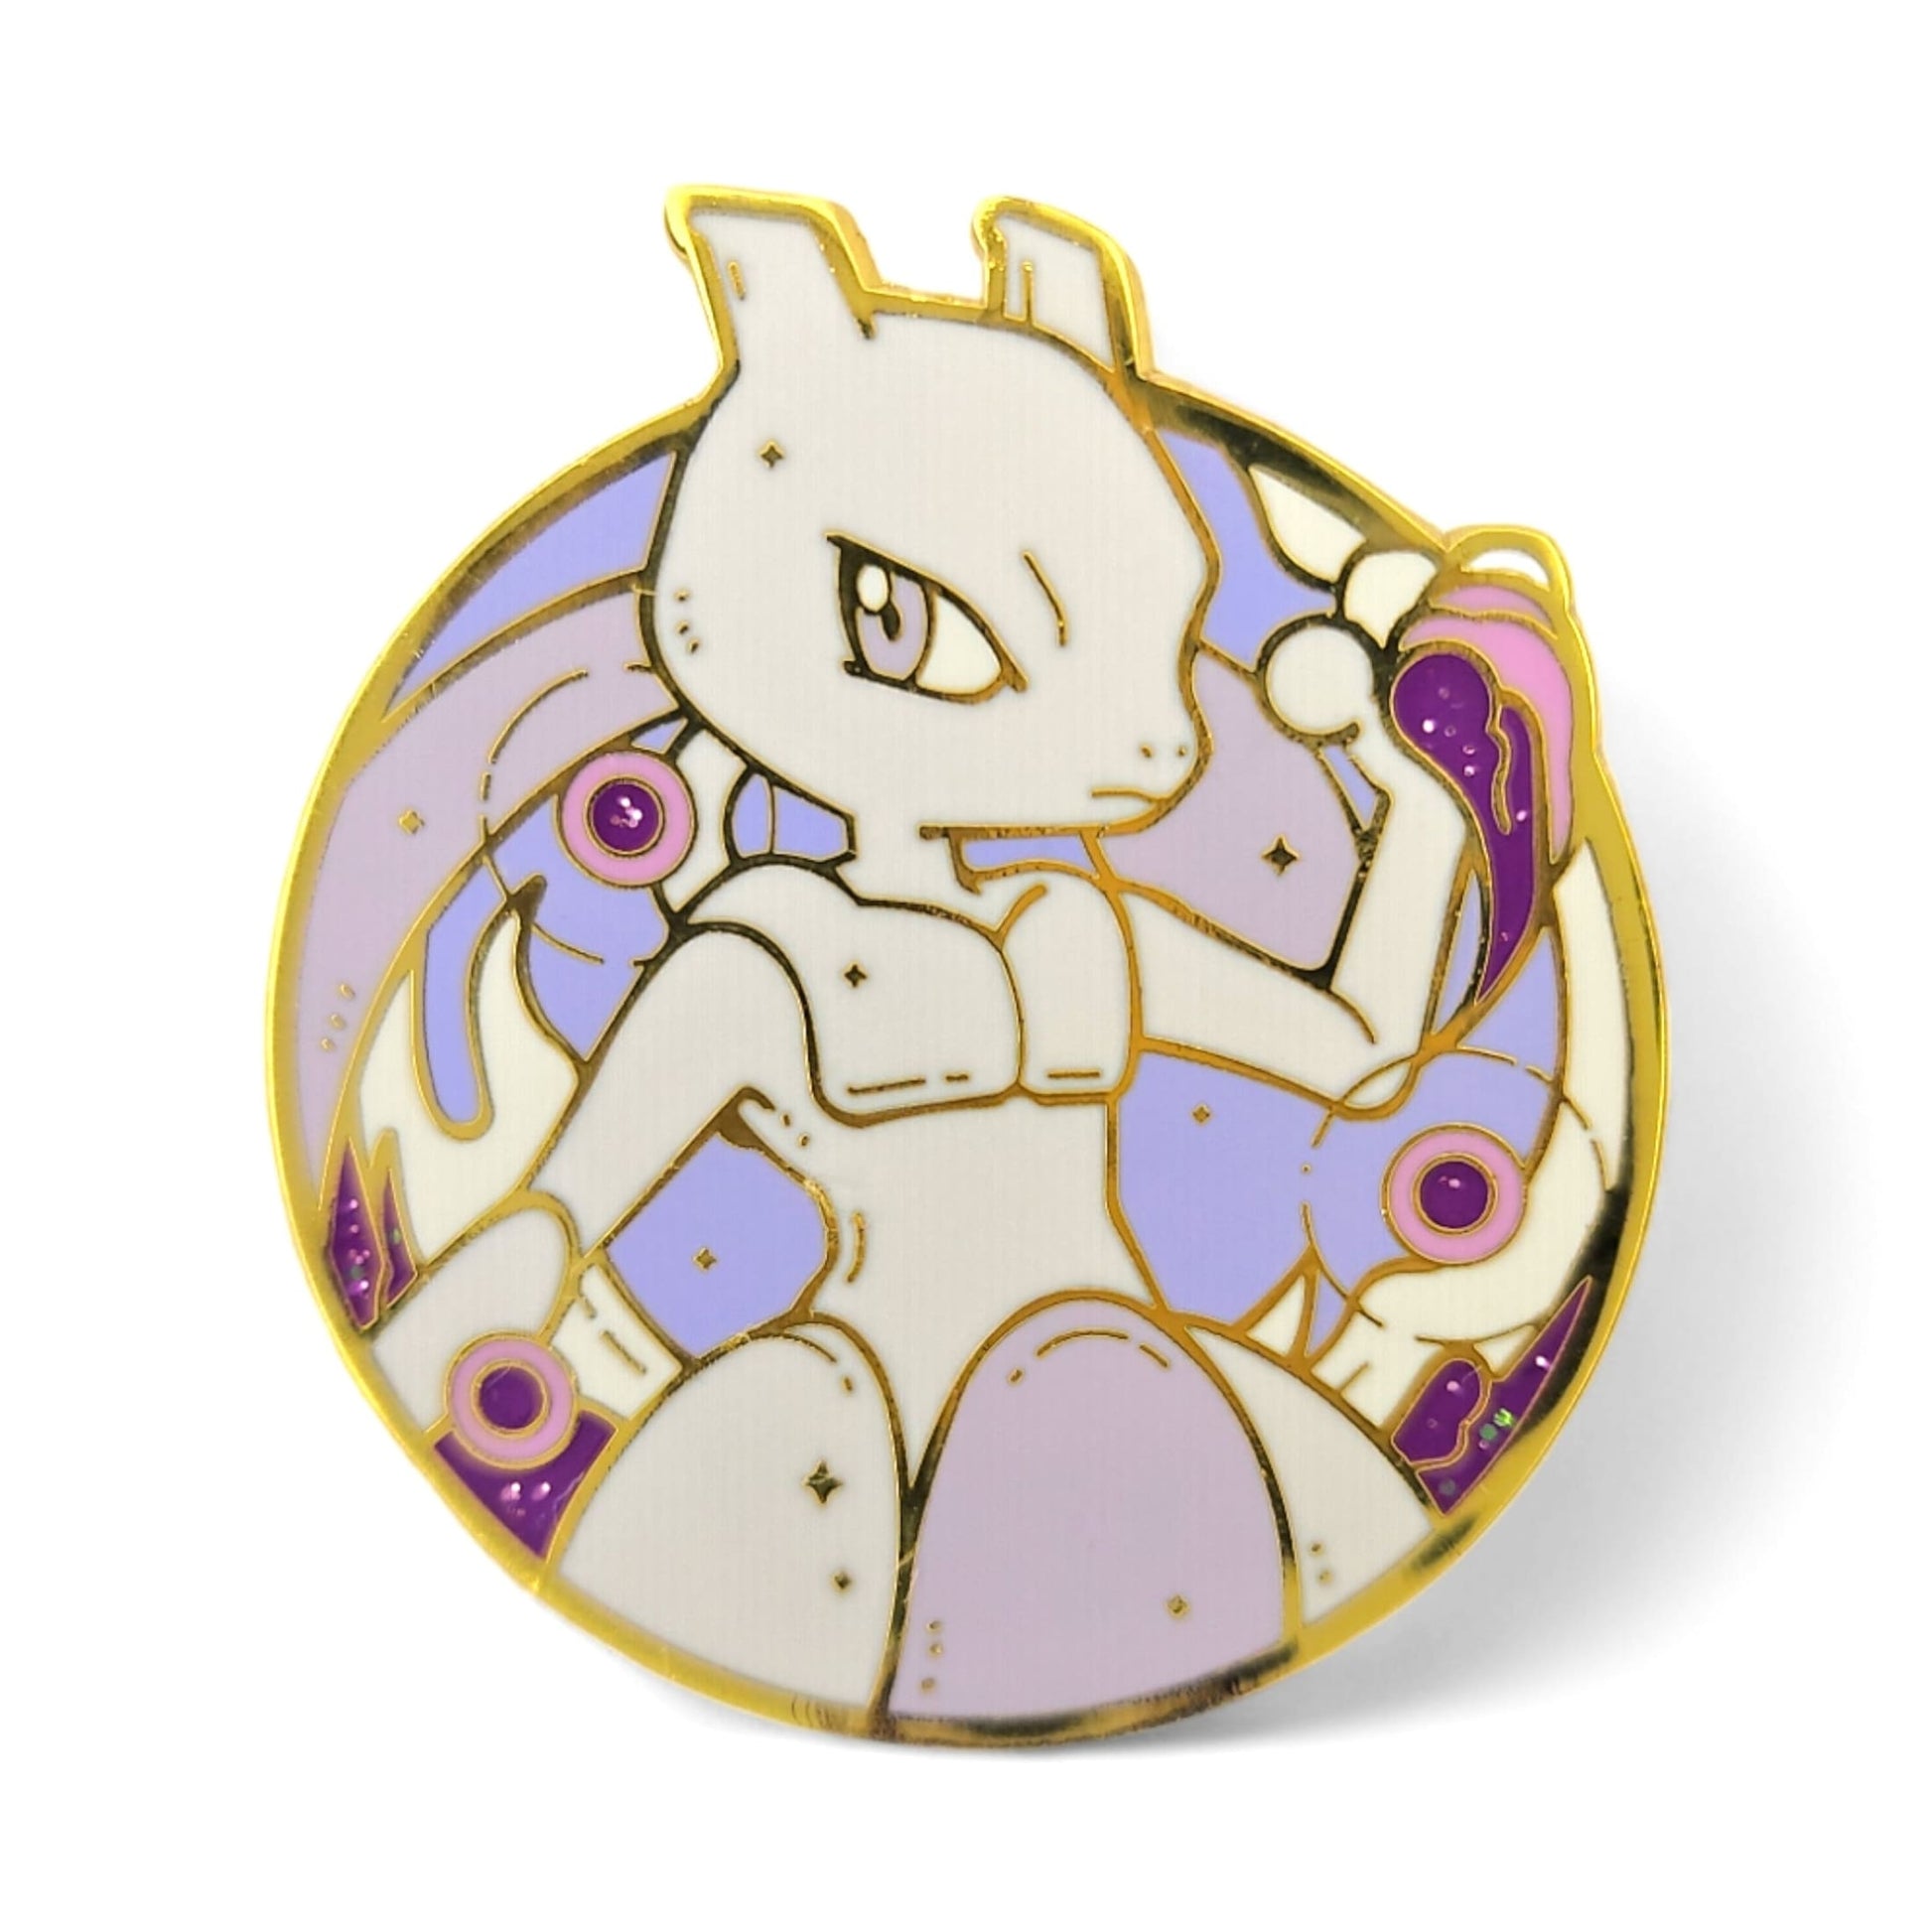 Pokémon Mew Two Hard Enamel Pin from Confetti Kitty, Only 15